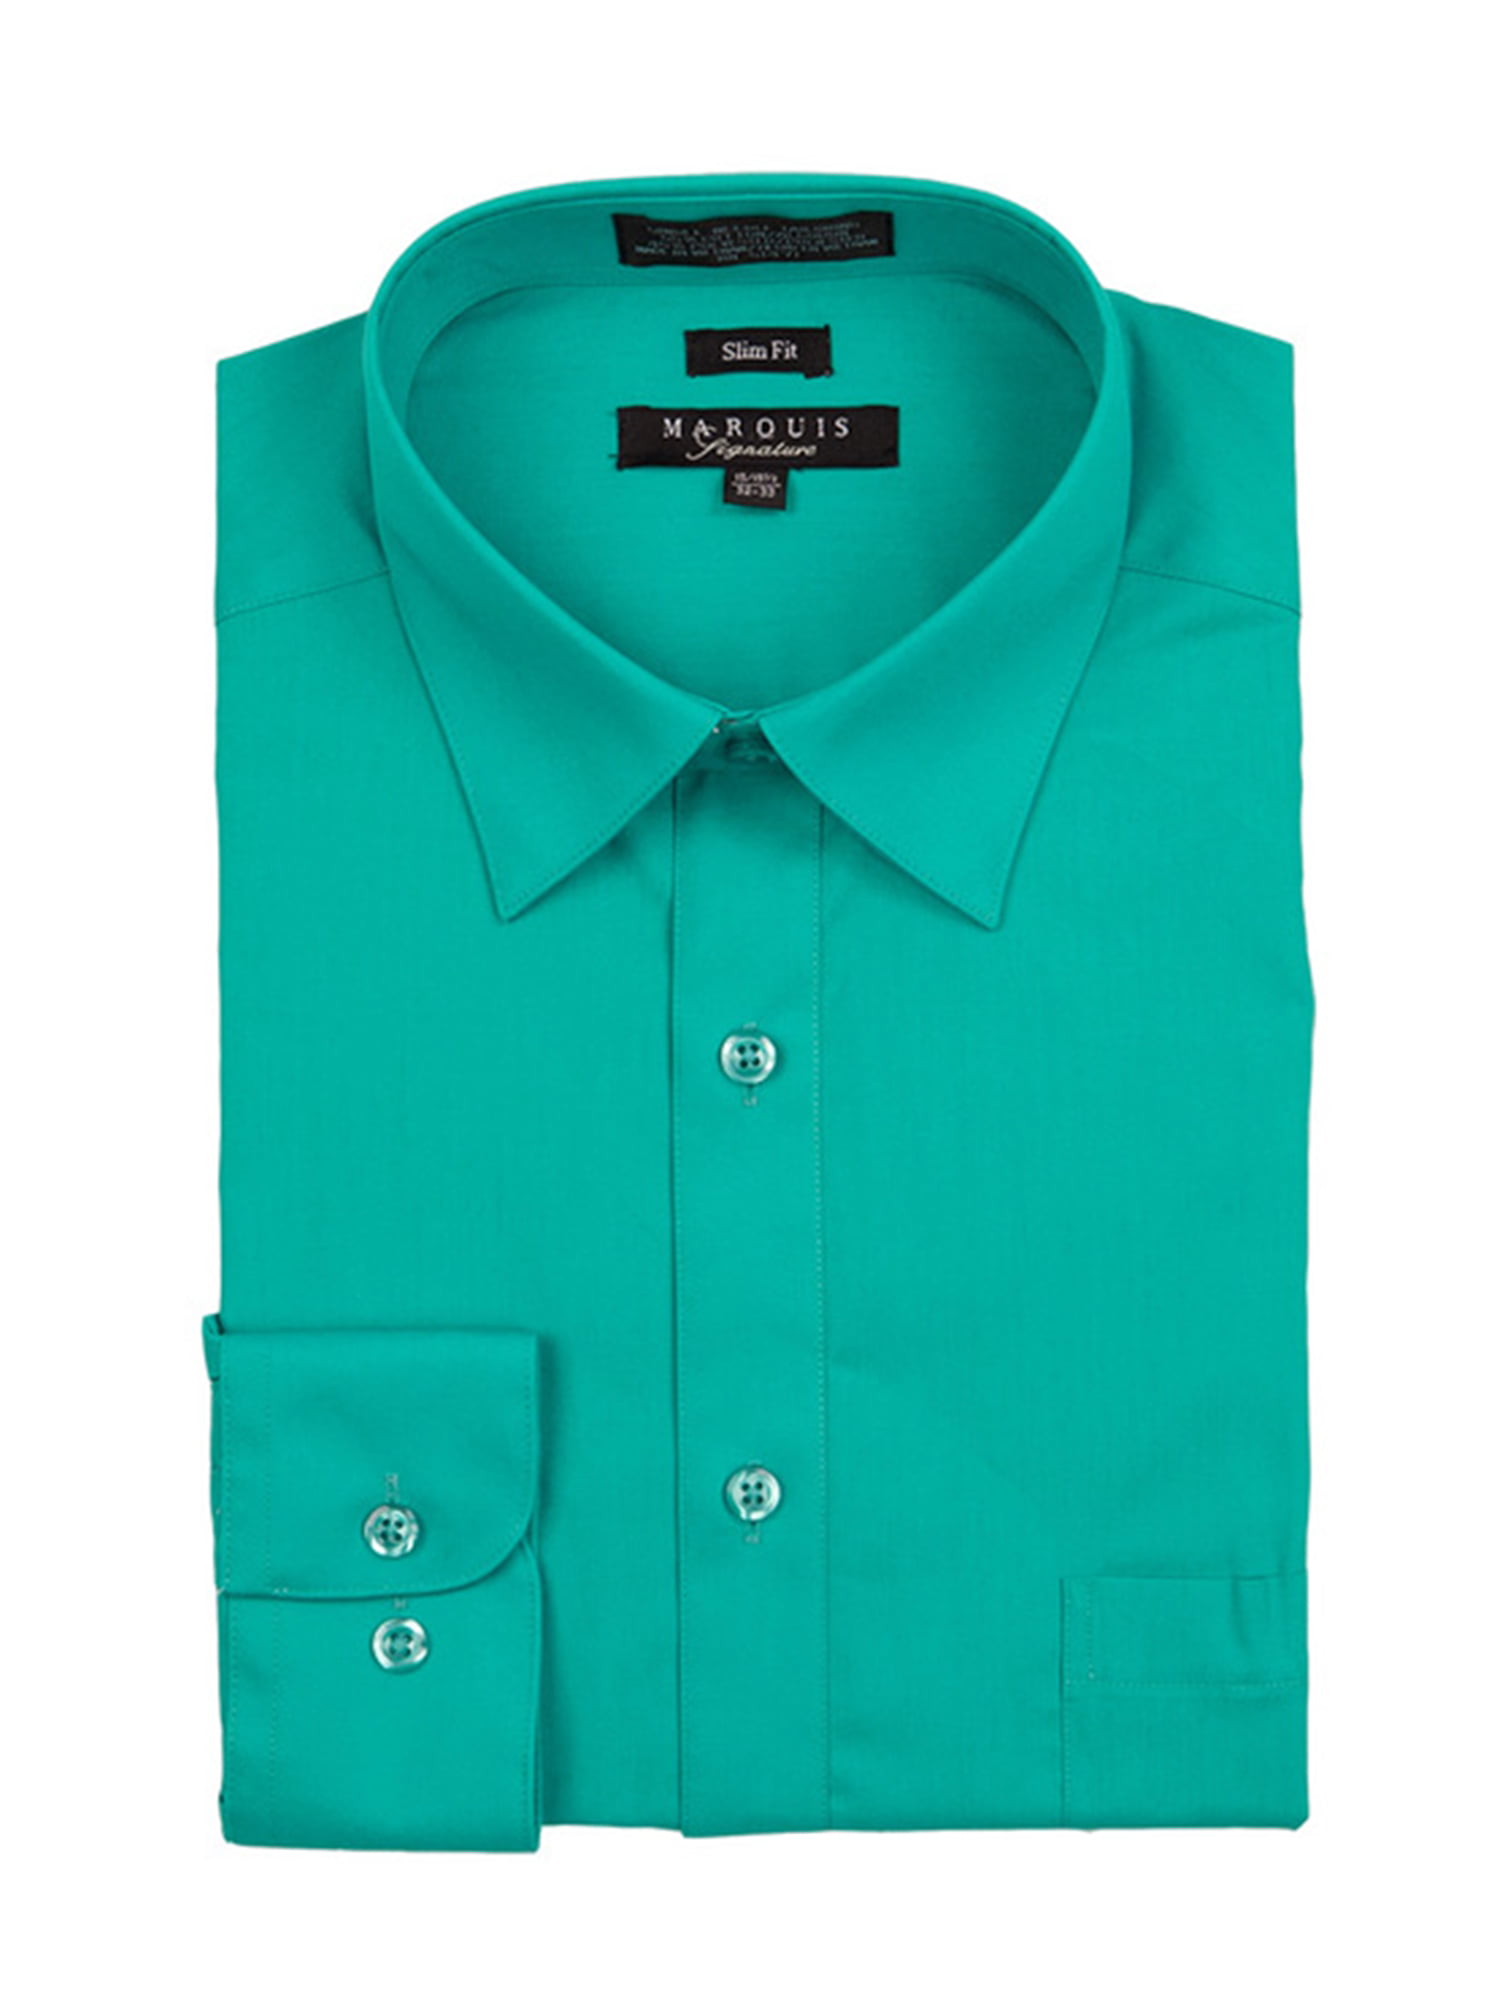 Marquis Men's Emerald Green Long Sleeve Slim Fit Dress Shirt N 17.5, S 34-35  - Walmart.com